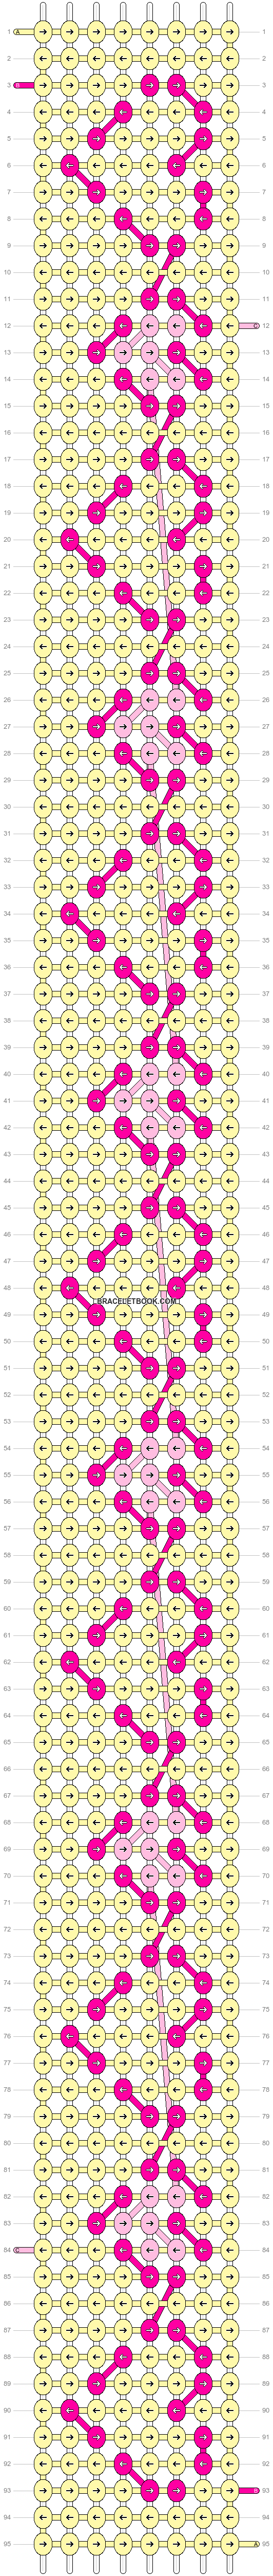 Alpha pattern #18028 variation #84237 pattern